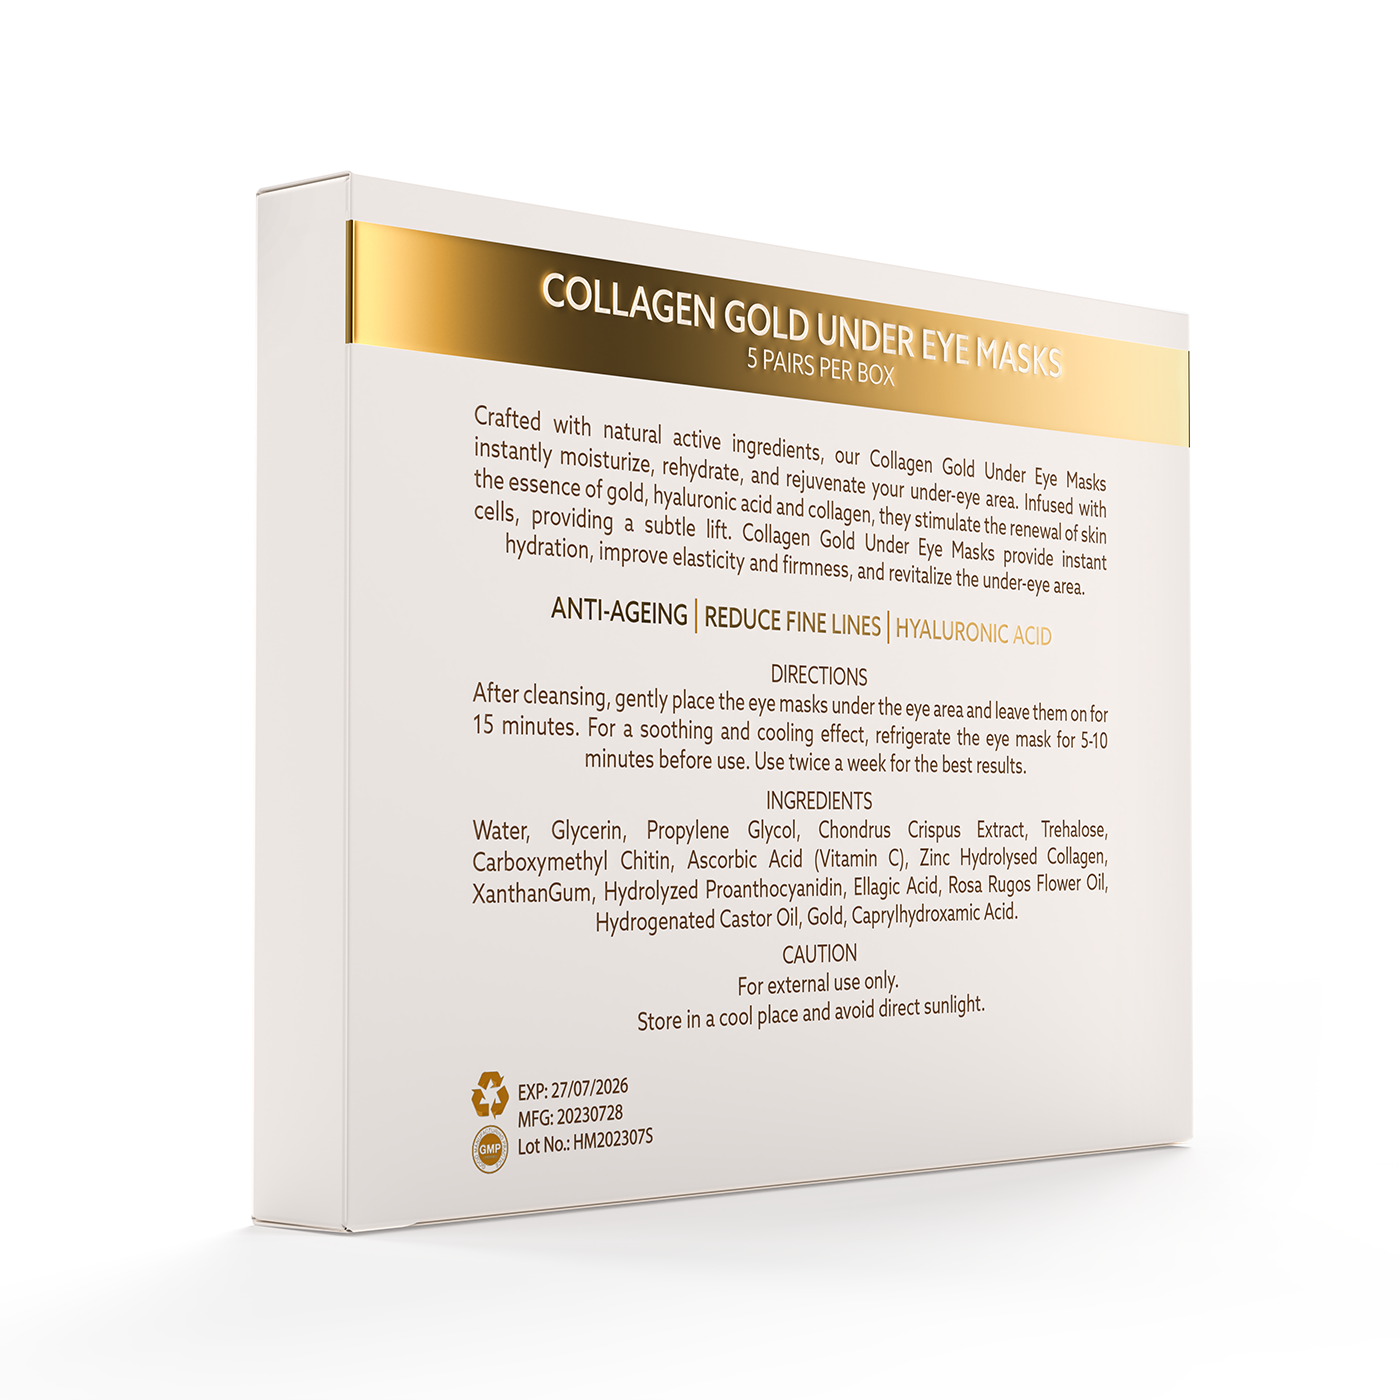 TheAgeHack Collagen Gold Under Eye Masks Nutrition and Ingredients